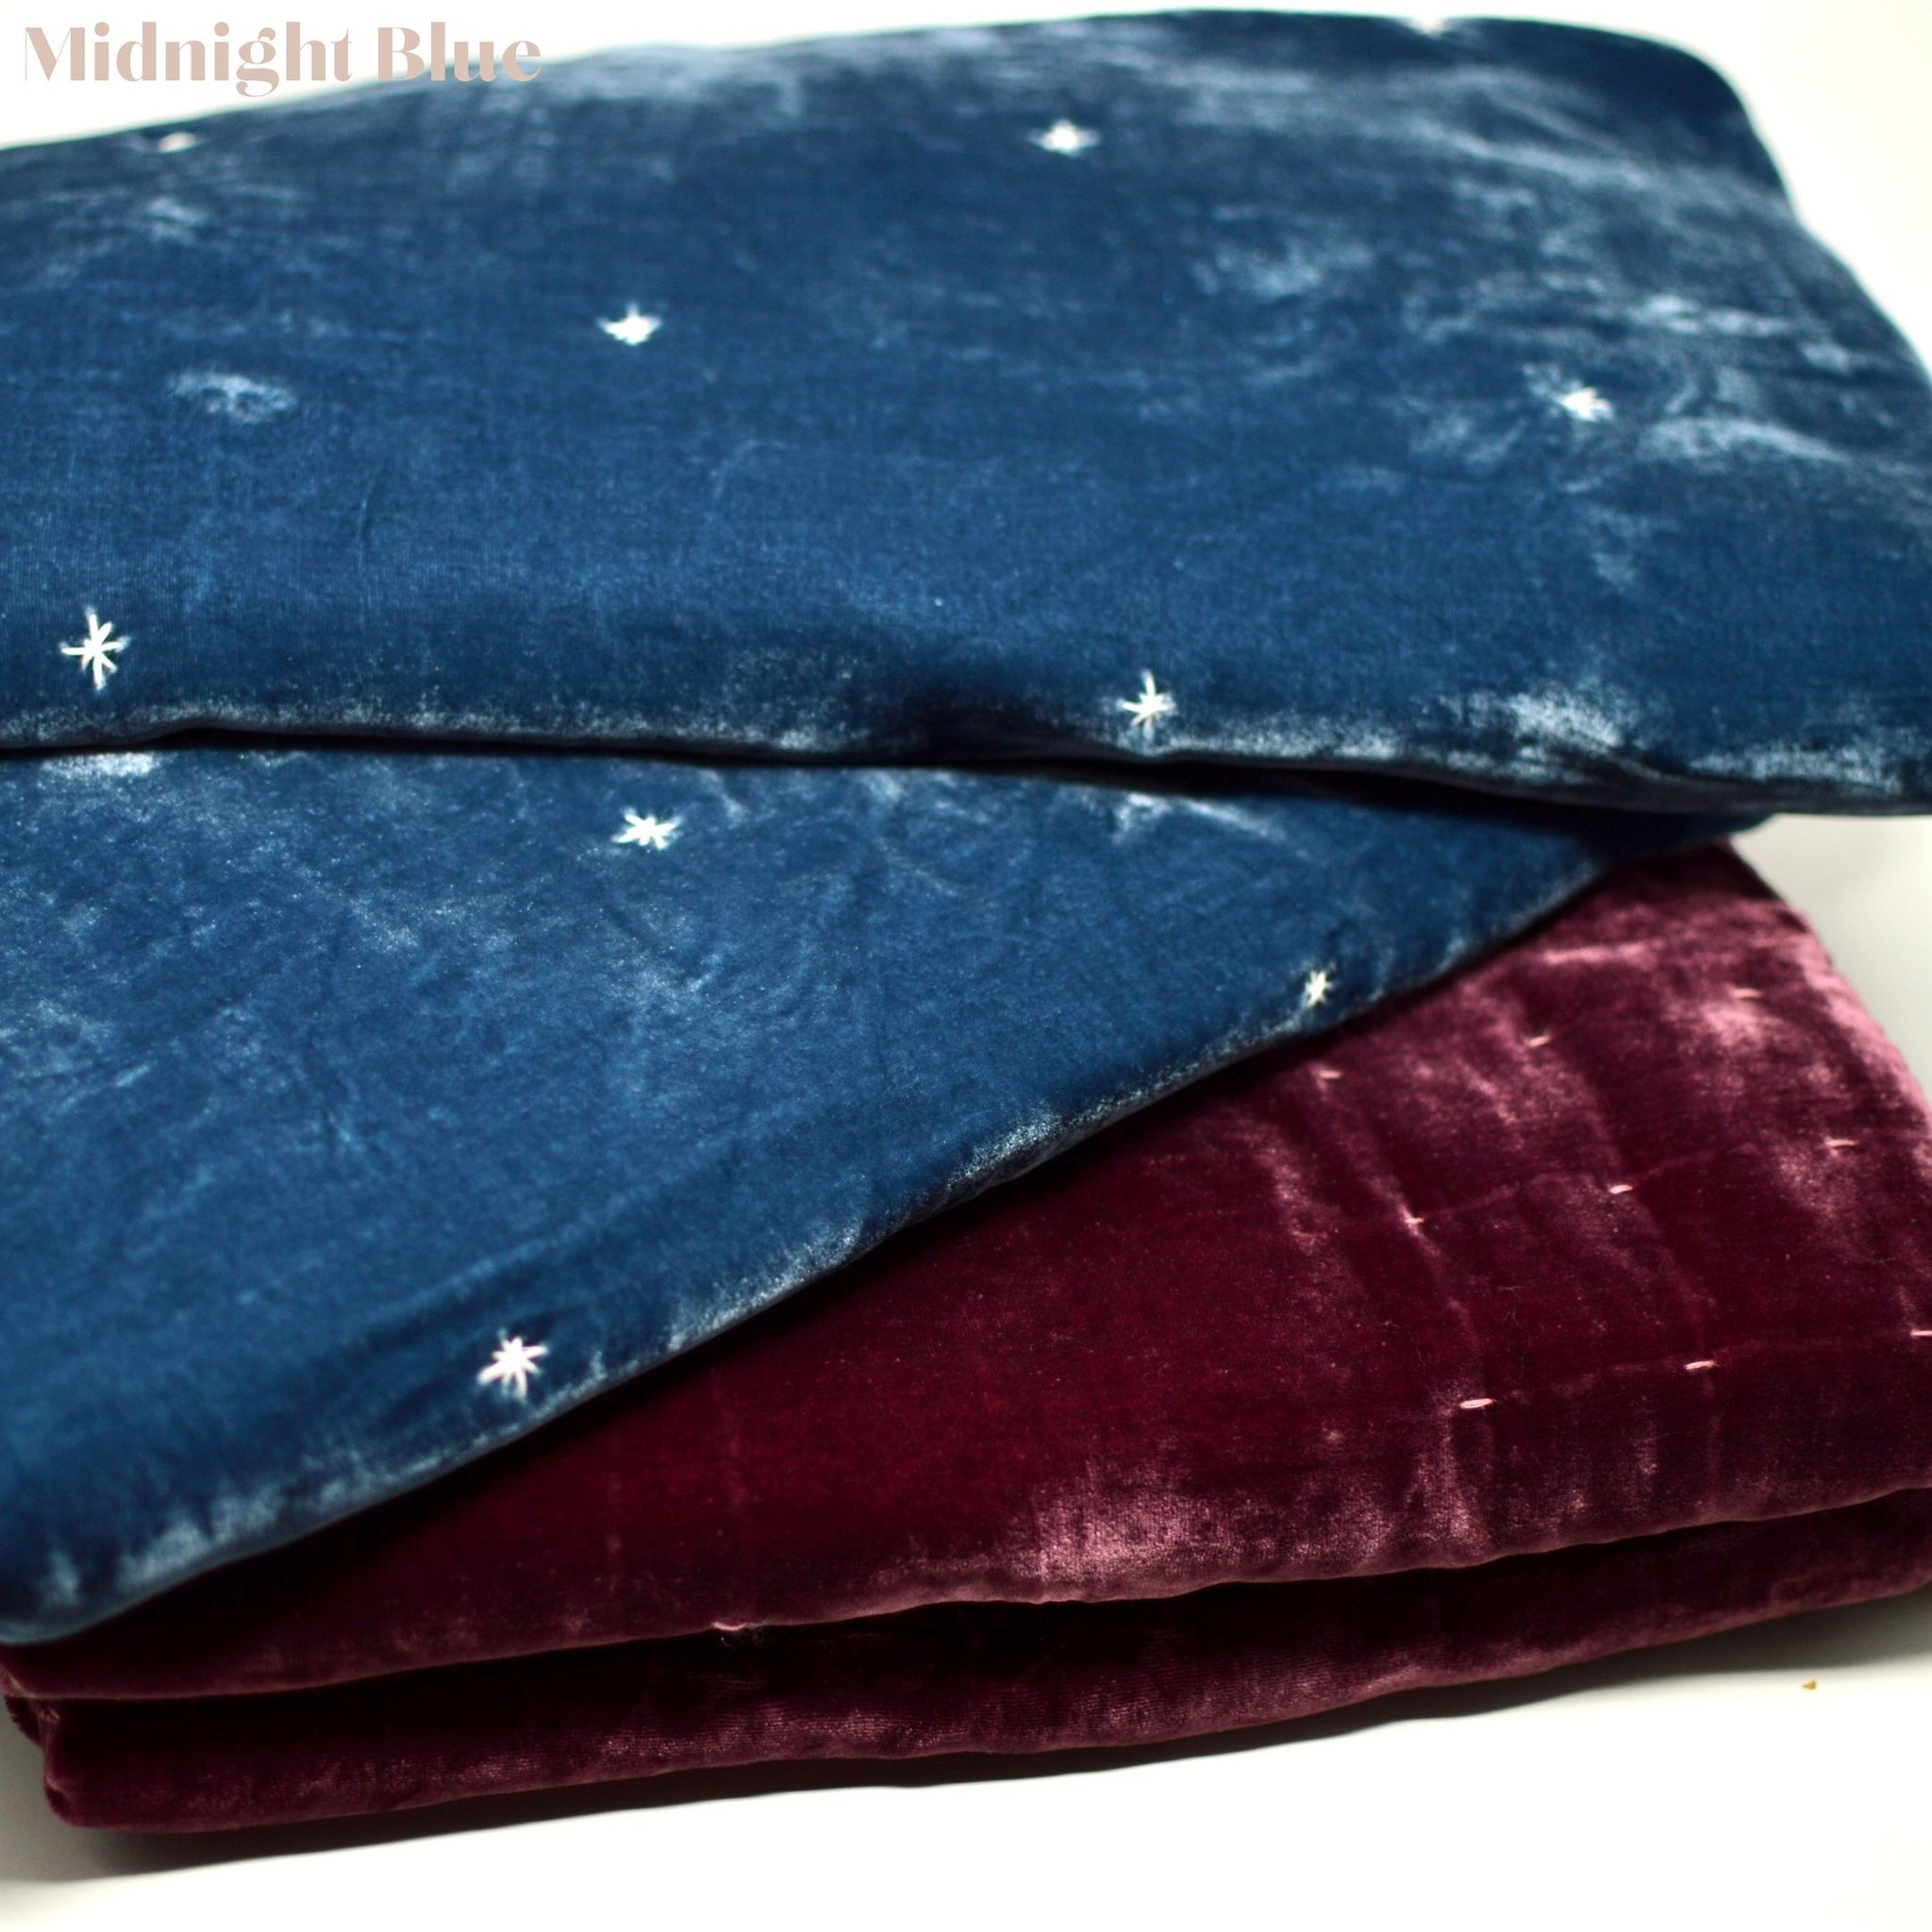 Silk Velvet Comforter Set - Hand Quilted Duvet- Starry Hand Stitching-Oxford Blue